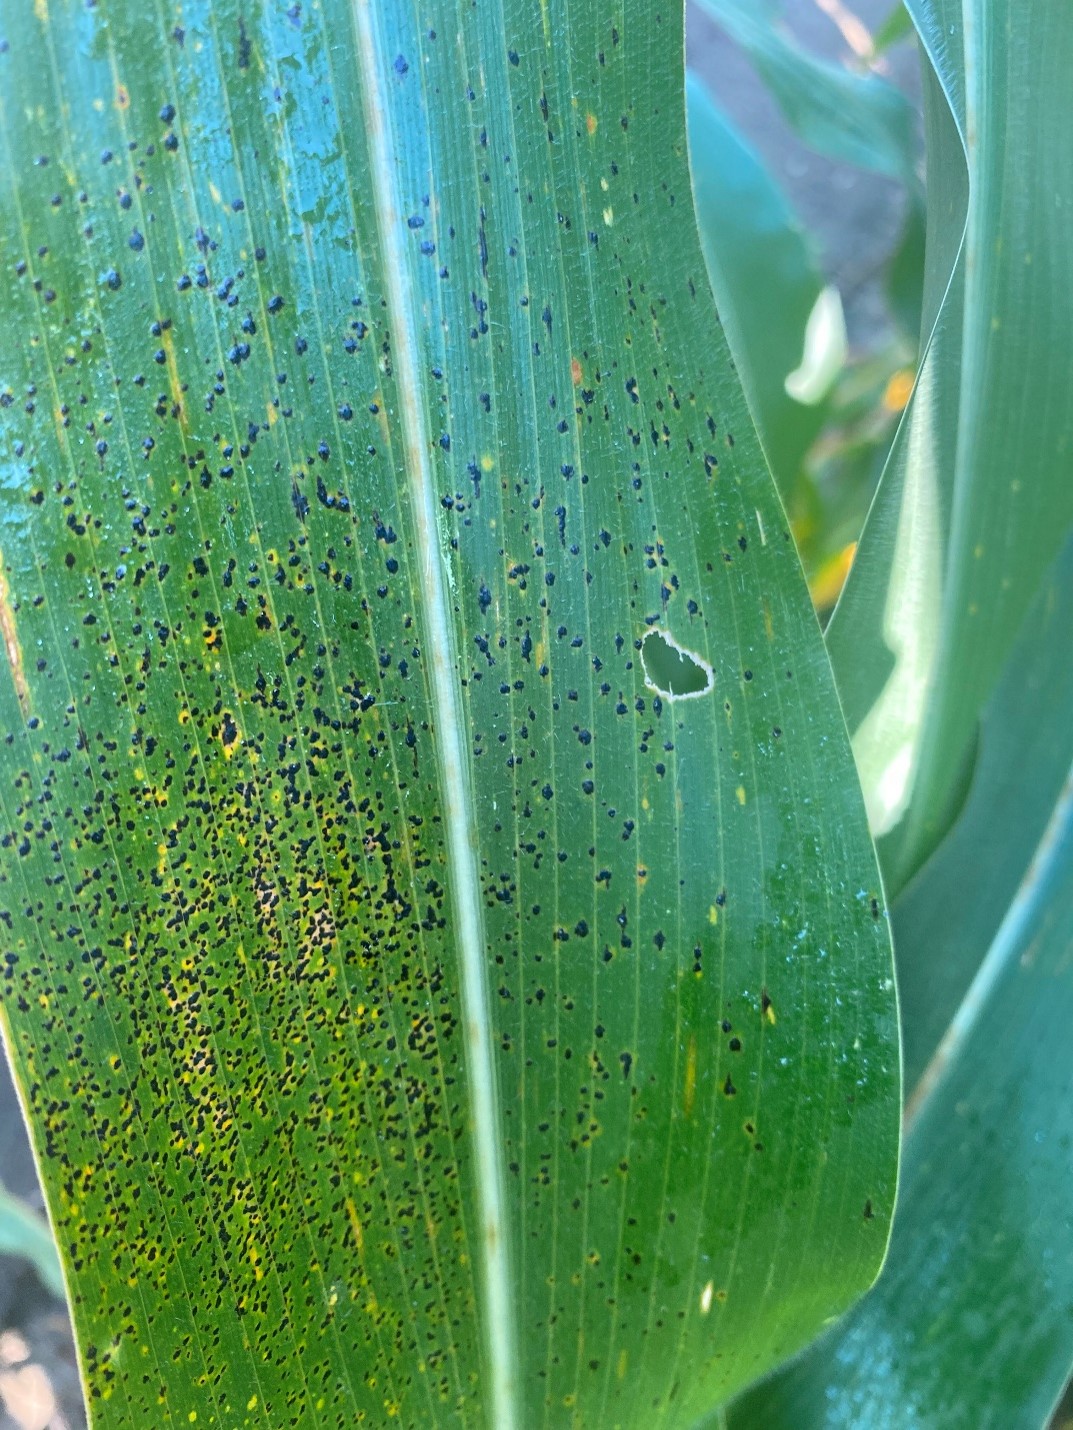 green corn leaf with black spots